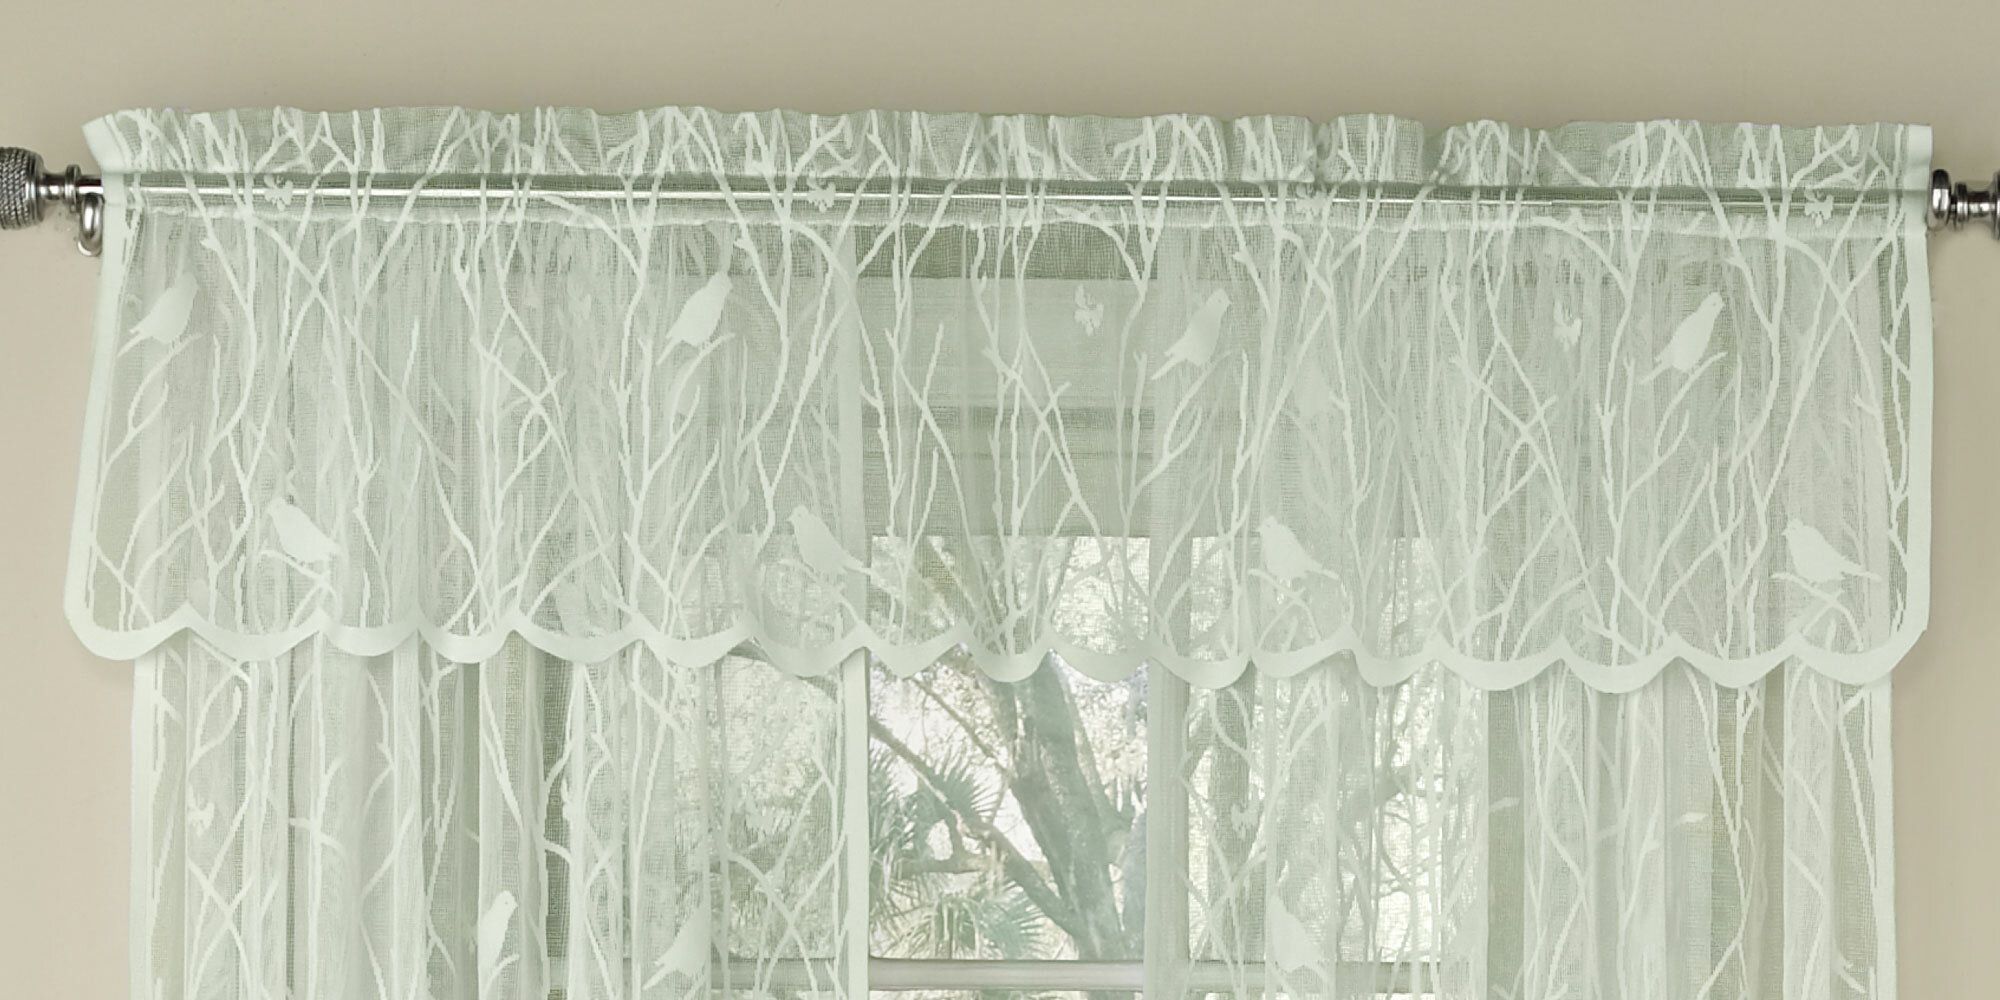 Nardi Knit Lace Song Bird Motif 56" Window Valance With White Knit Lace Bird Motif Window Curtain Tiers (View 11 of 20)